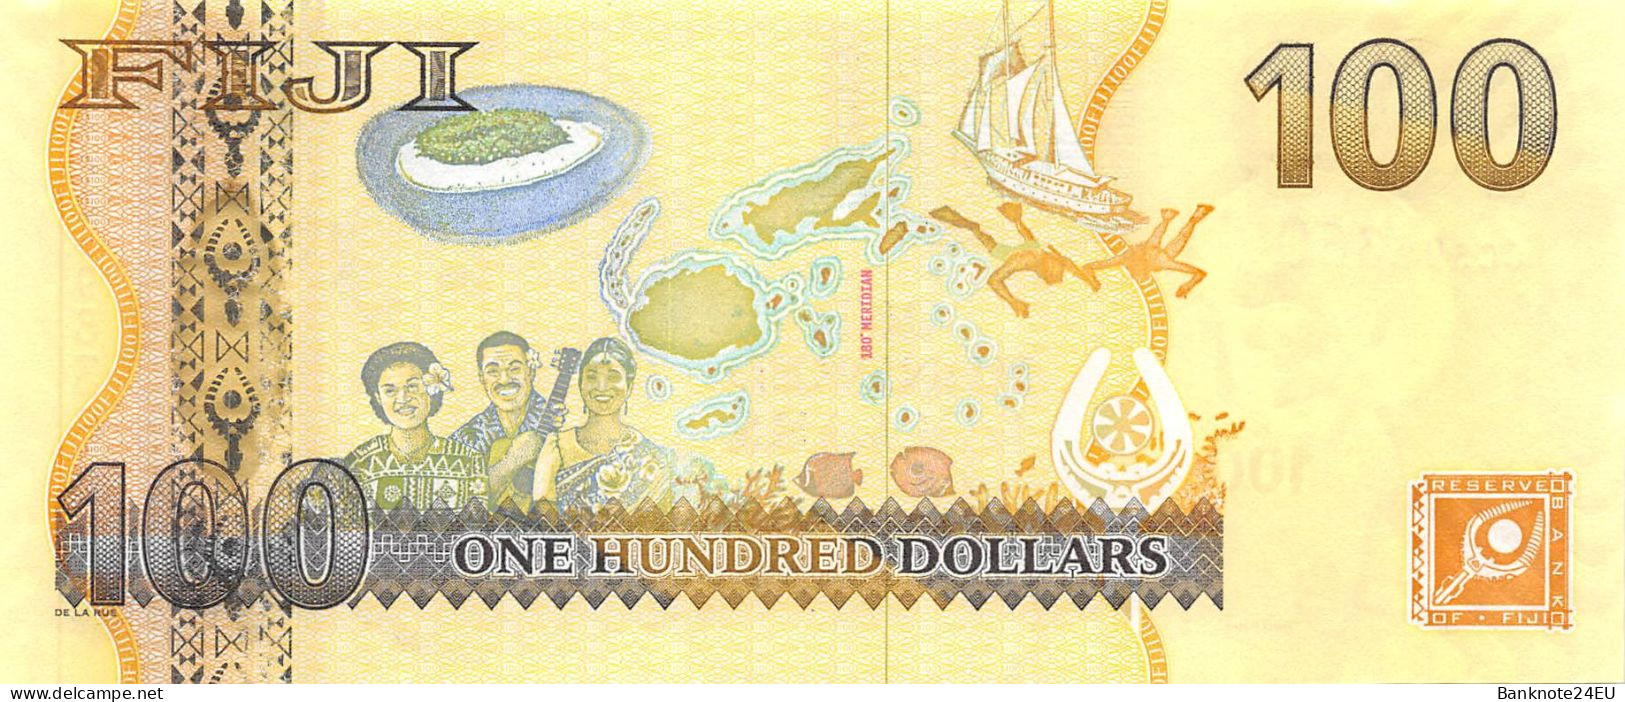 Fiji Islands 100 Dollars 2007 Unc Pn 114a, Banknote24 - Fidschi